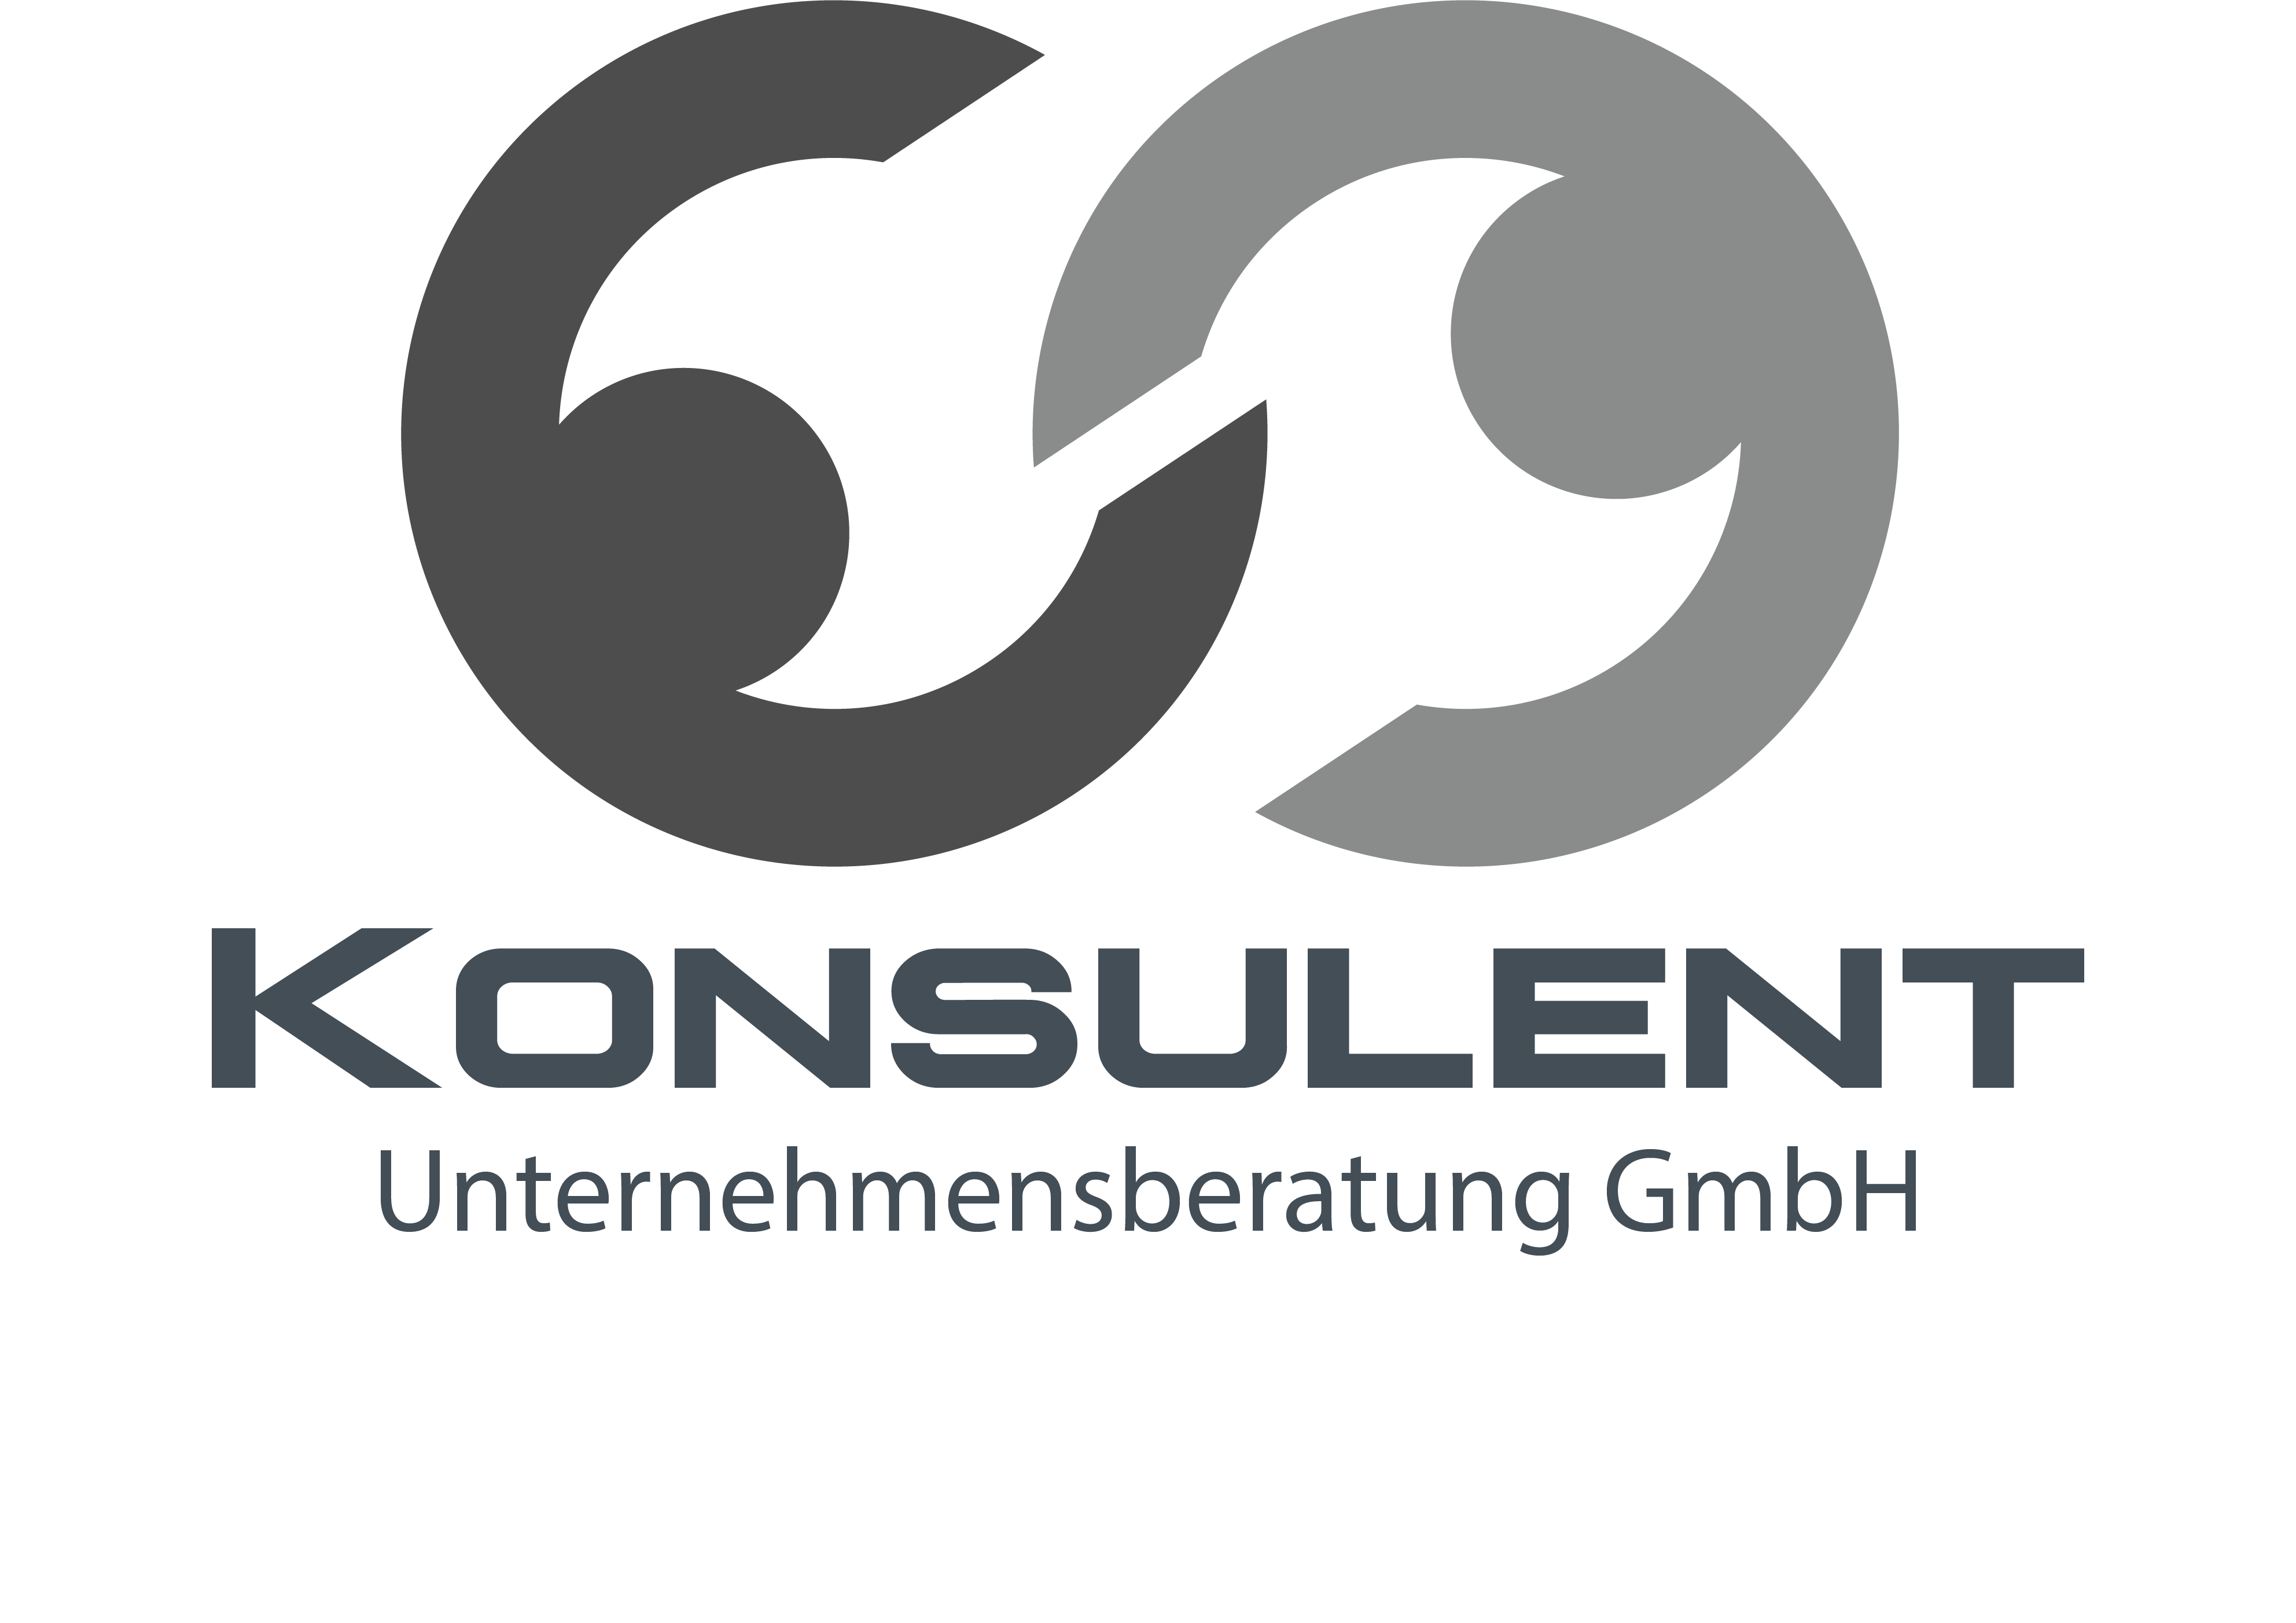 Konsulent Unternehmensberatung GmbH